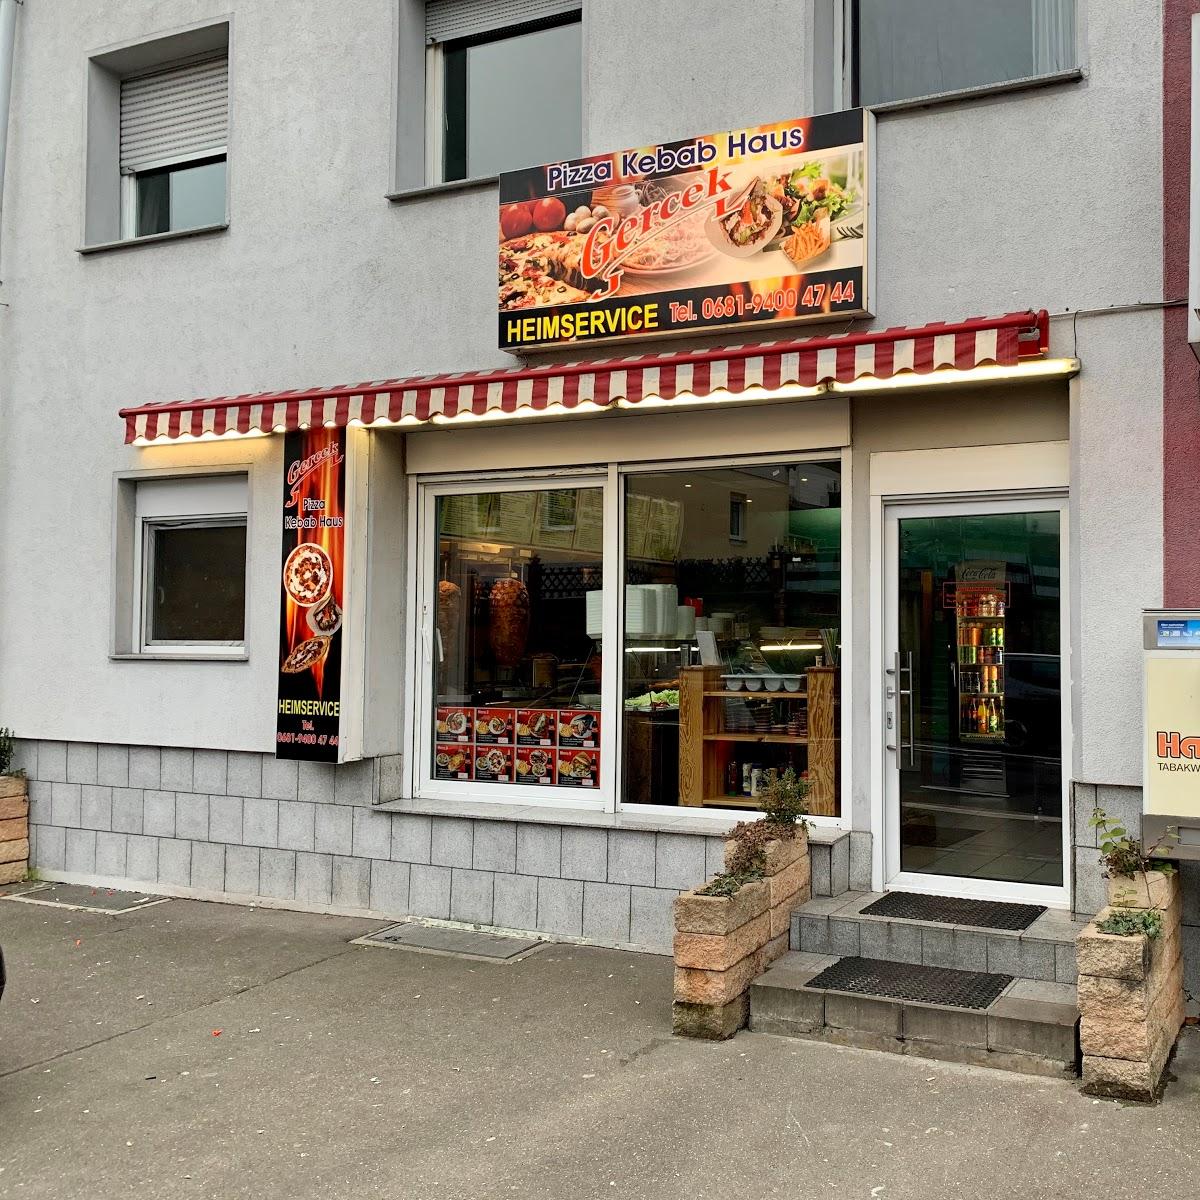 Restaurant "Gercek Pizza & Kebab Haus" in Saarbrücken